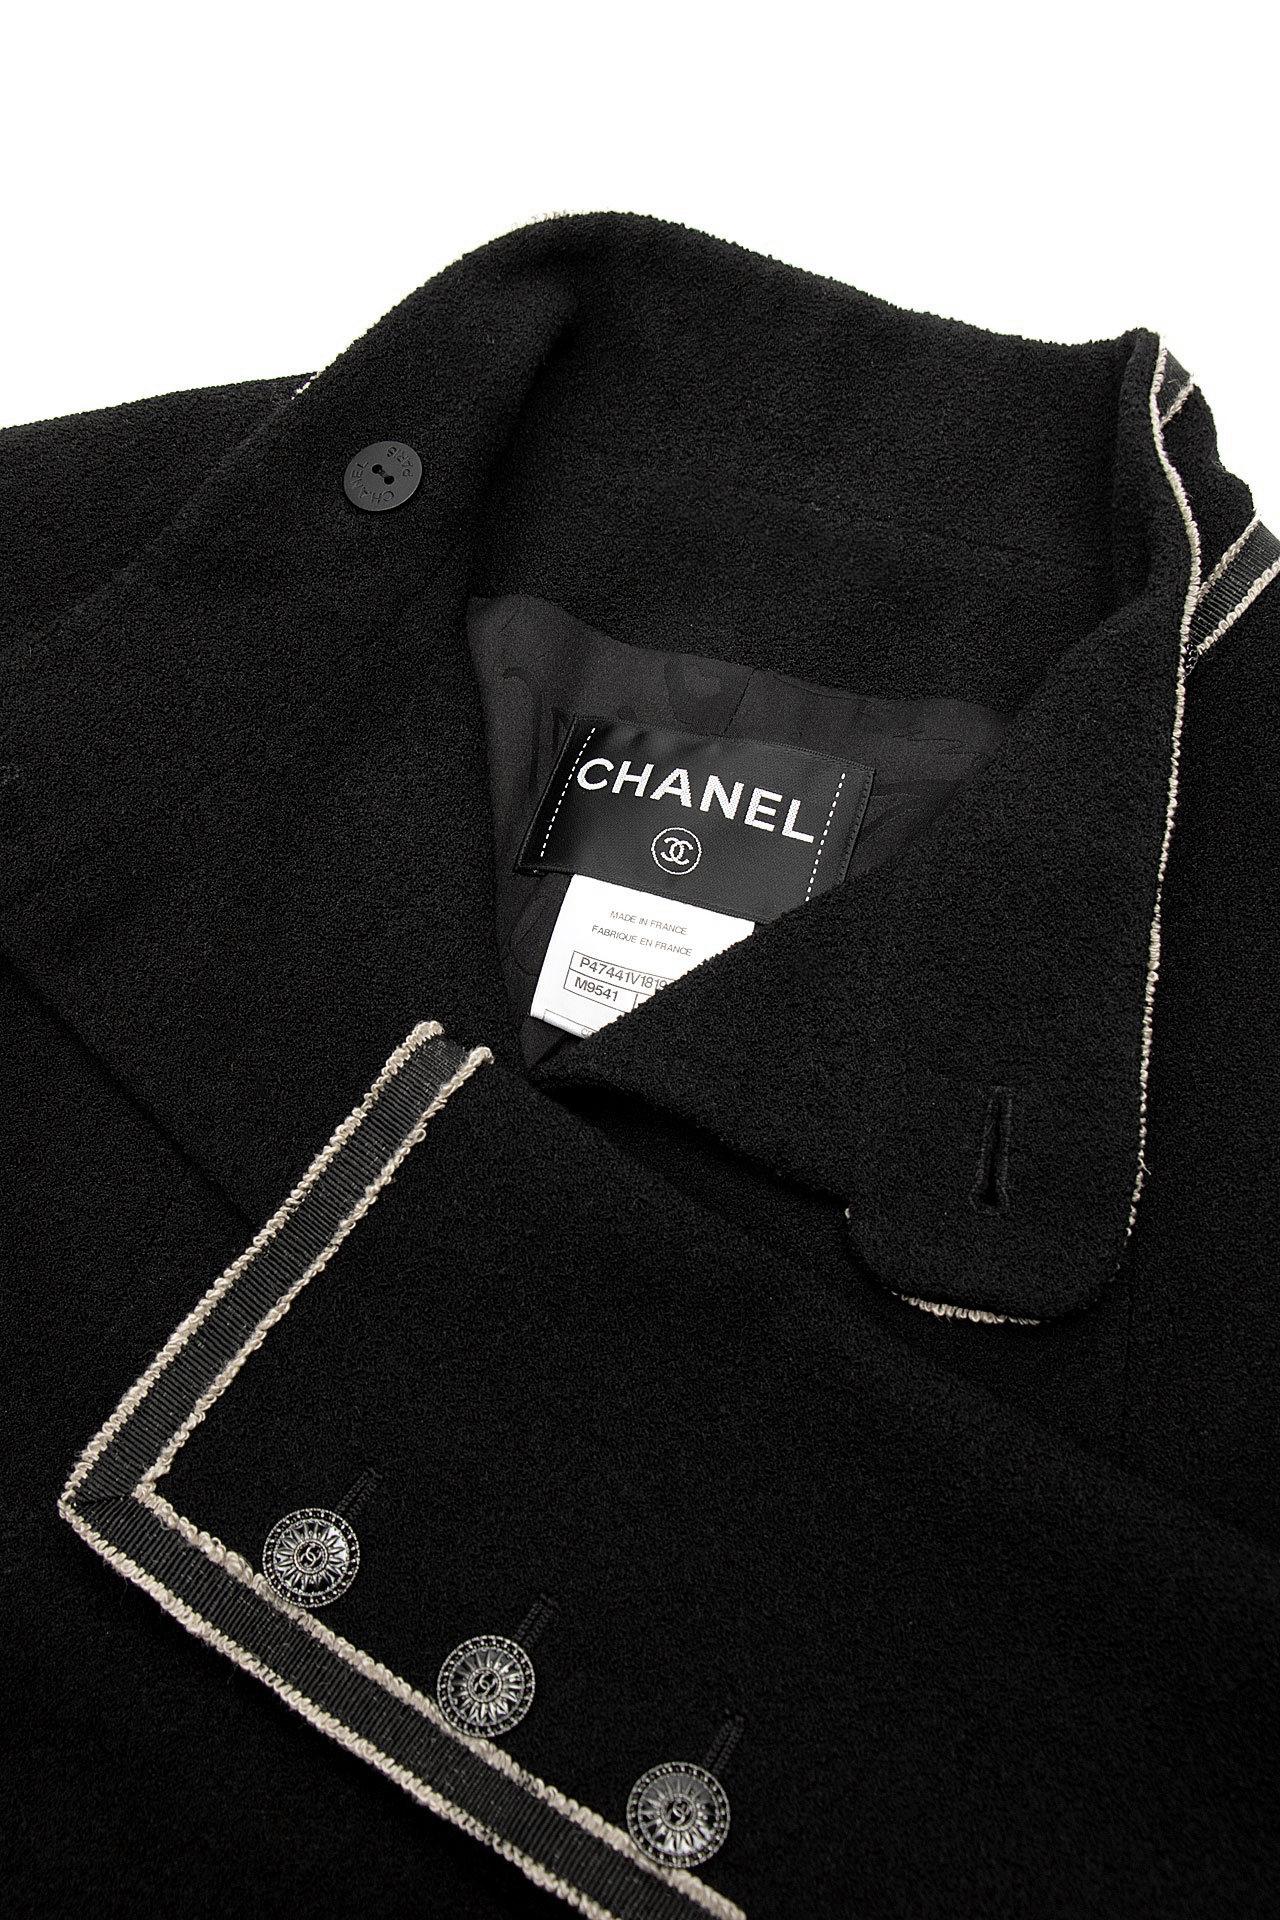 Chanel CC Buttons Paris / Singapore Runway Black Tweed Coat 5